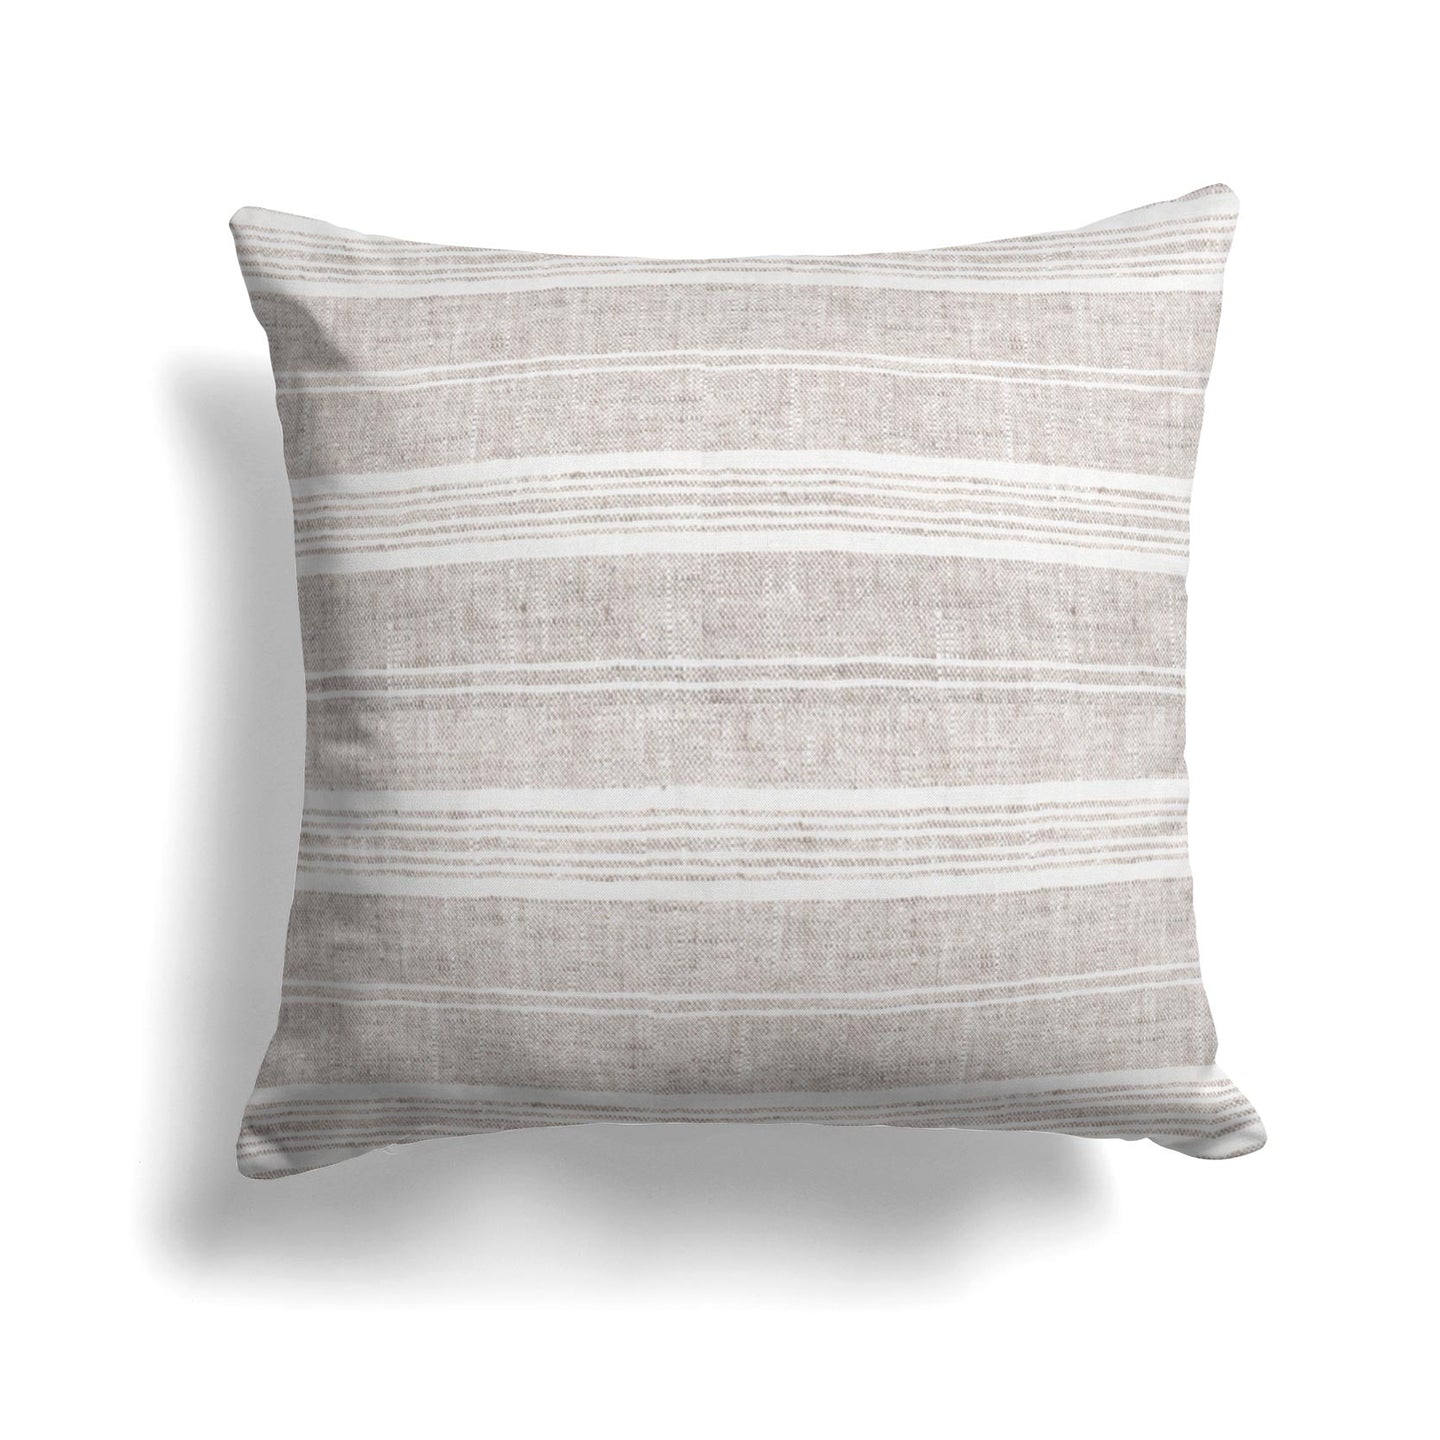 Multistripe Linen Pillow Cover in Birch